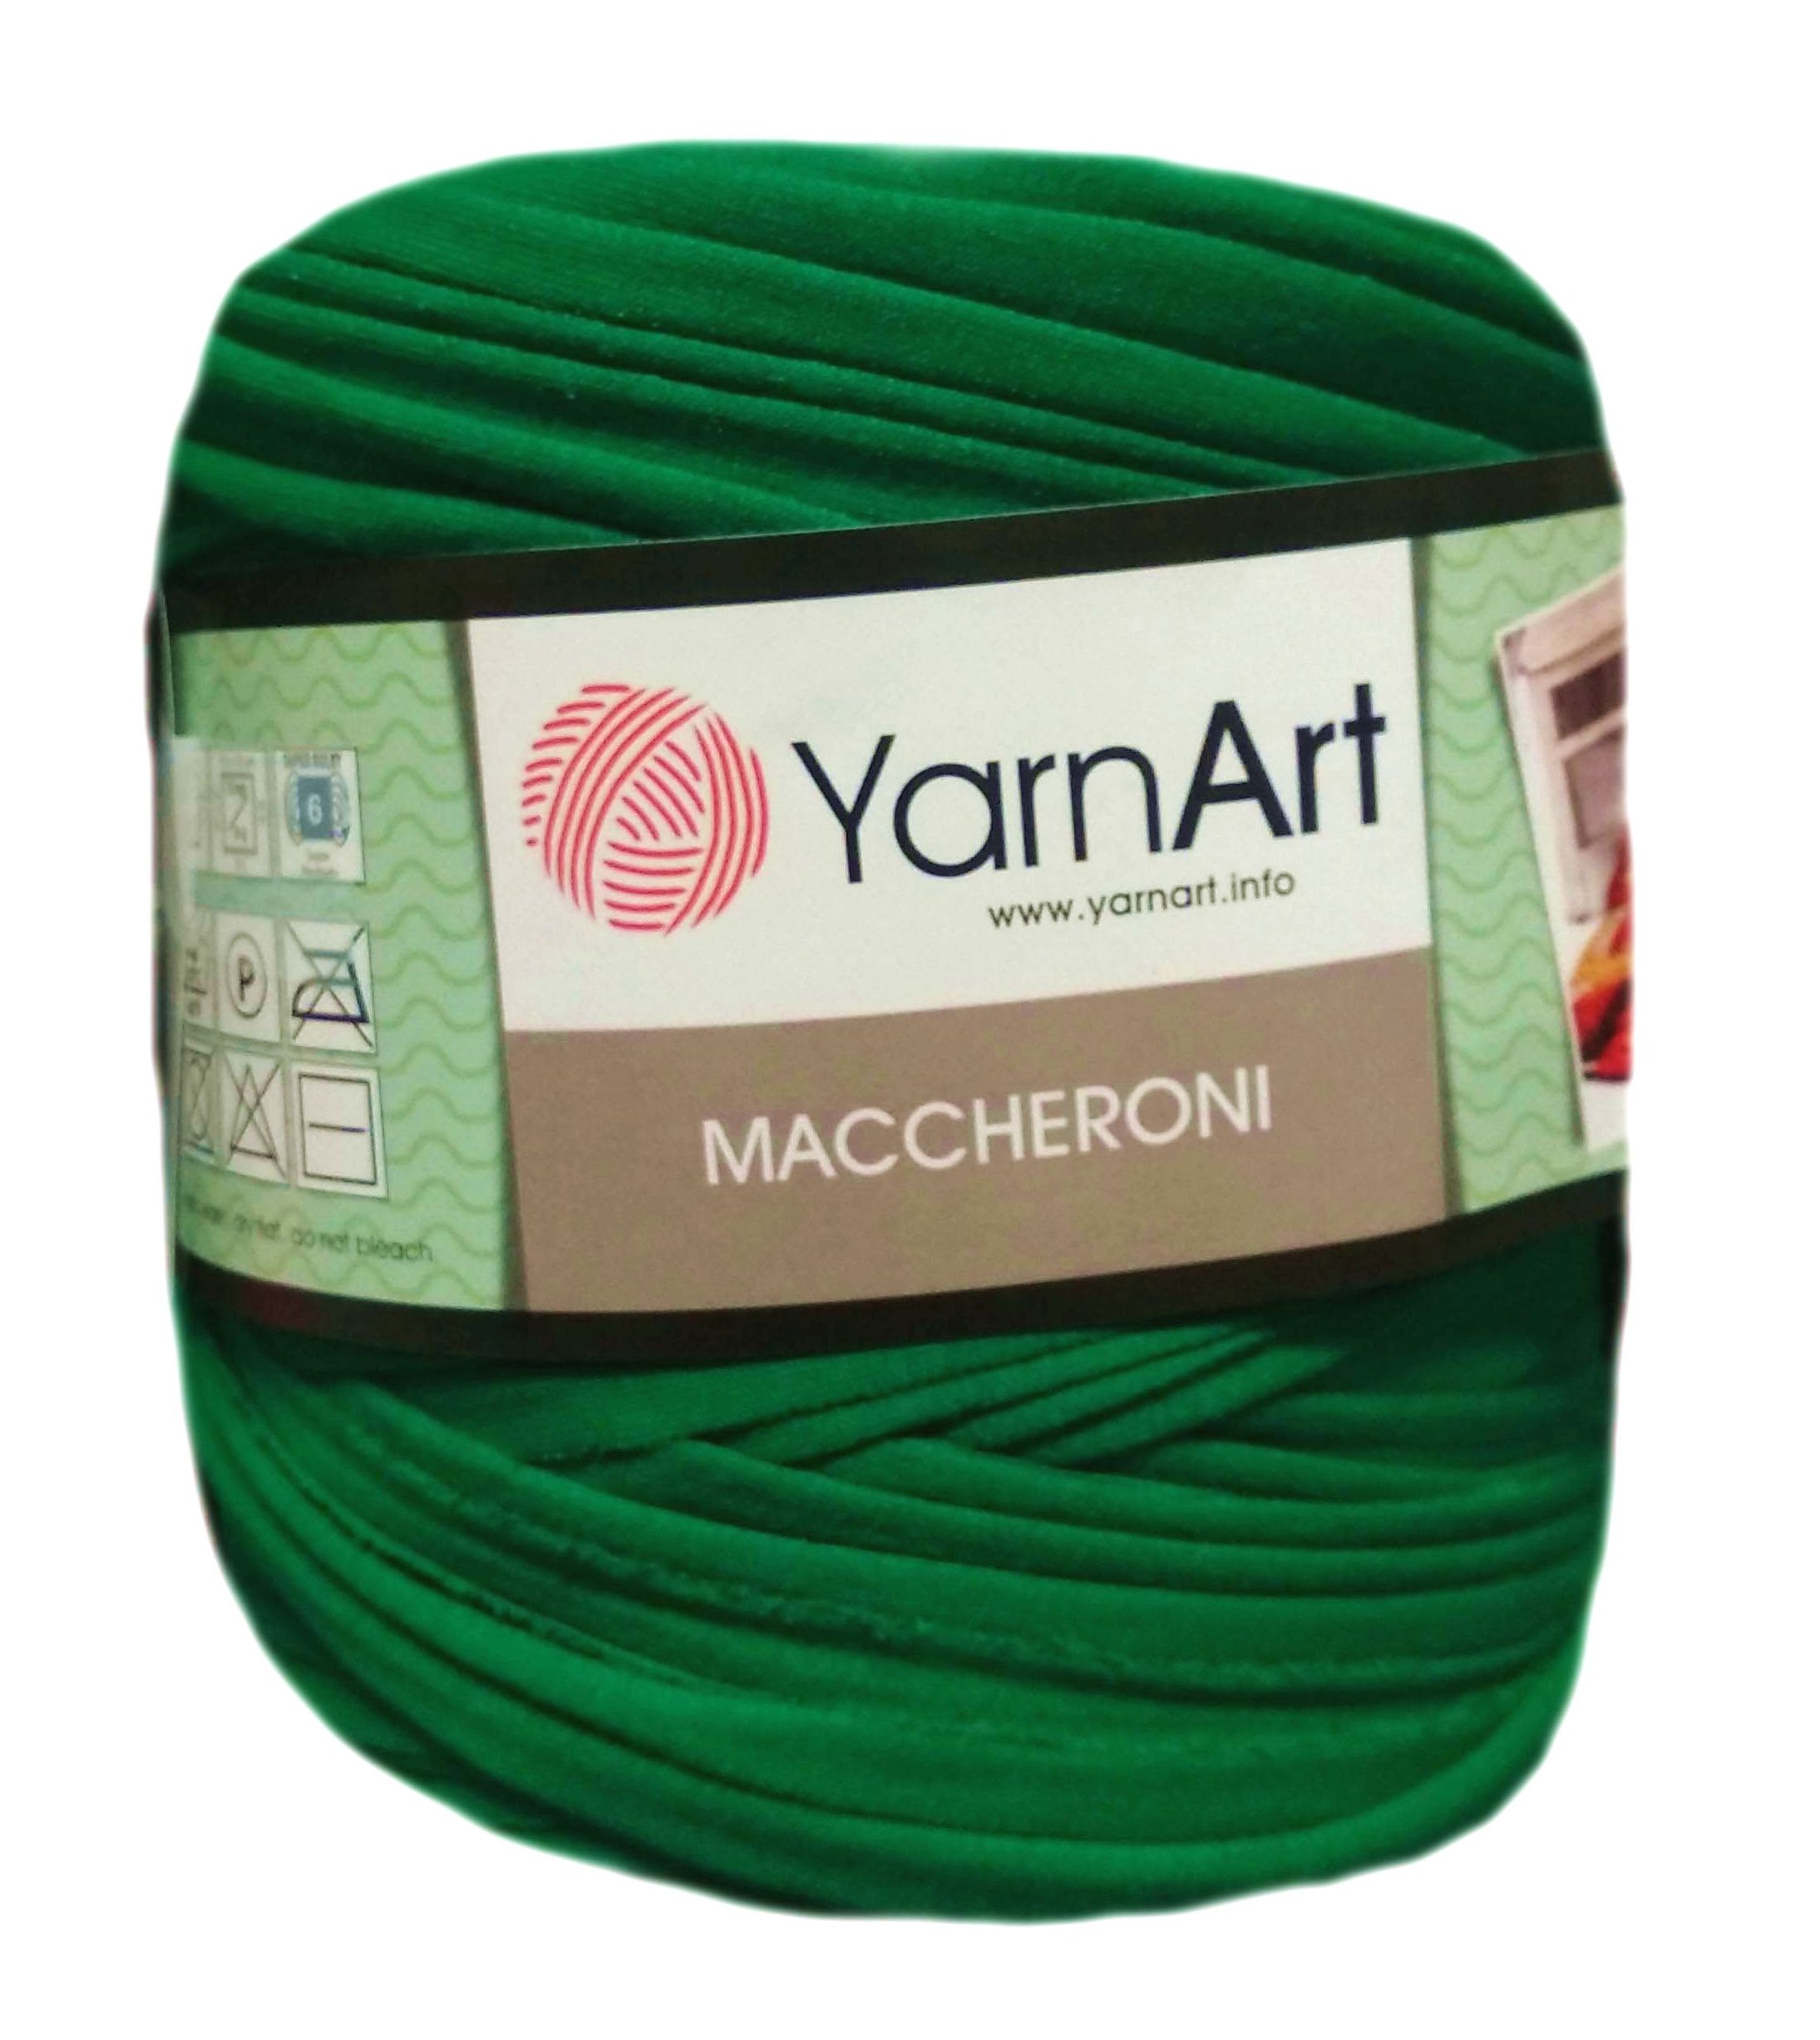 YarnArt MACCHERONI, élénk zöld póló fonal.Tű 12-15 mm.